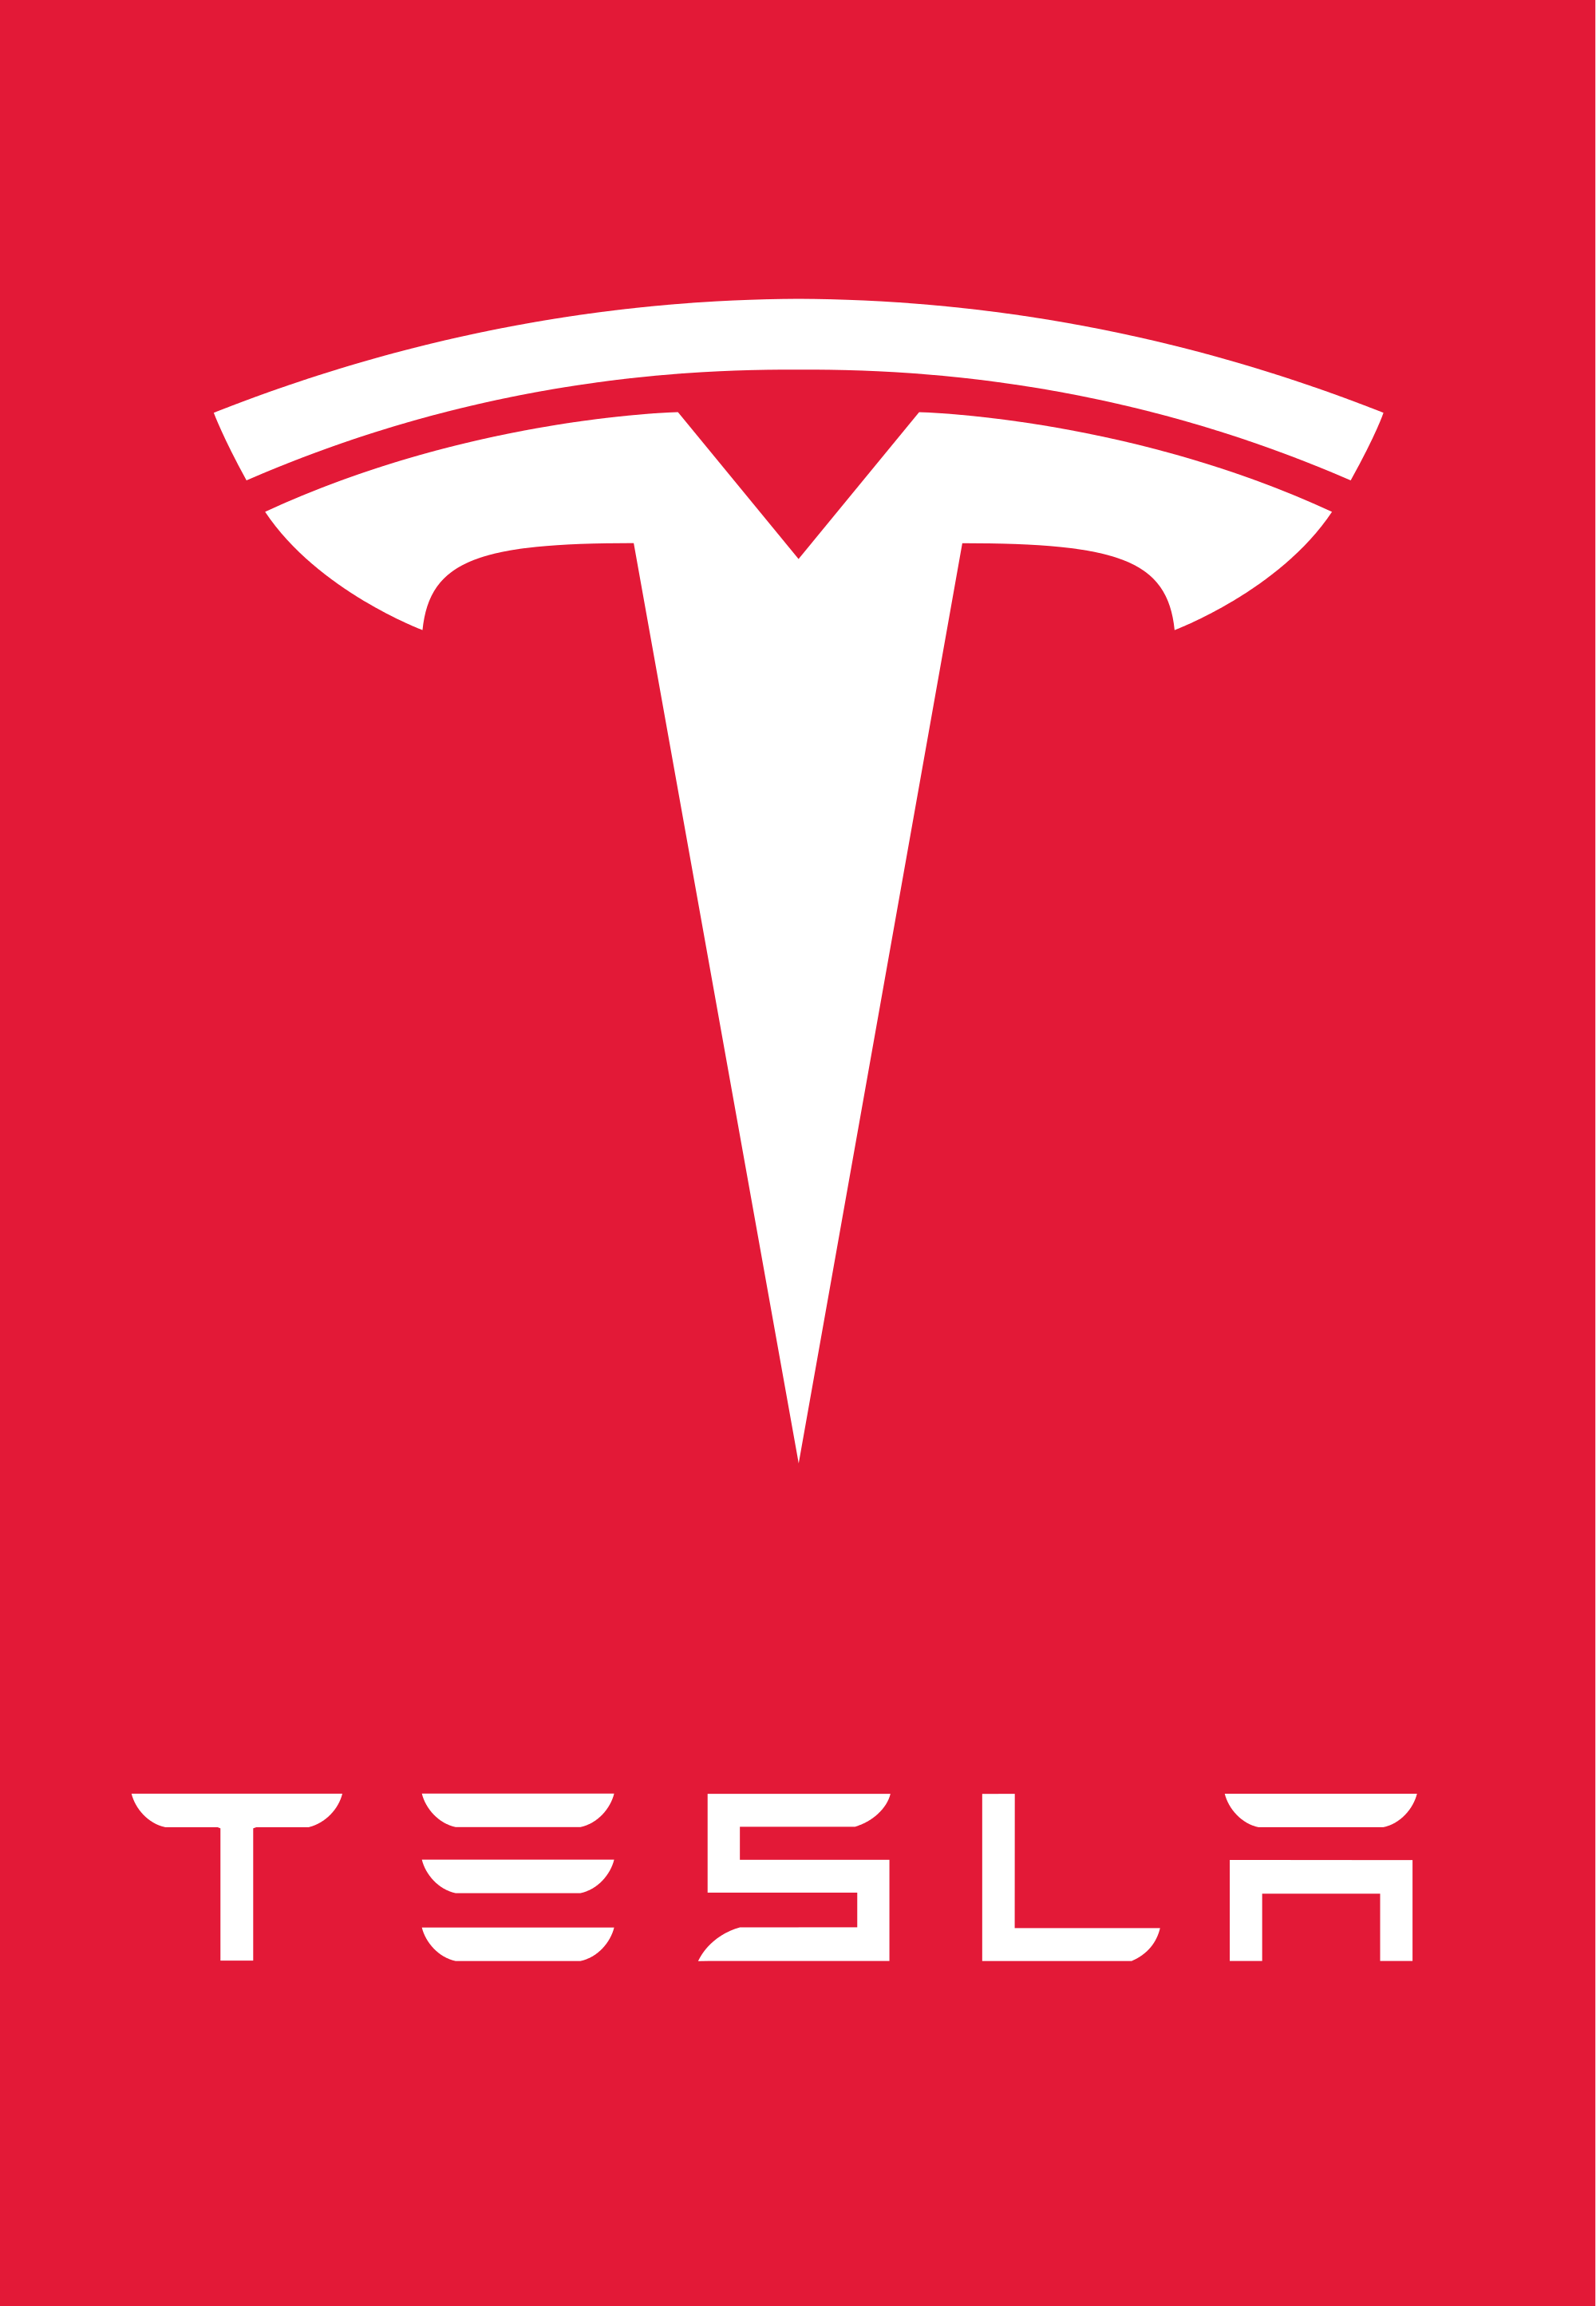 Red Symbol Logo - Tesla Logo, Tesla Car Symbol Meaning and History | Car Brand Names.com